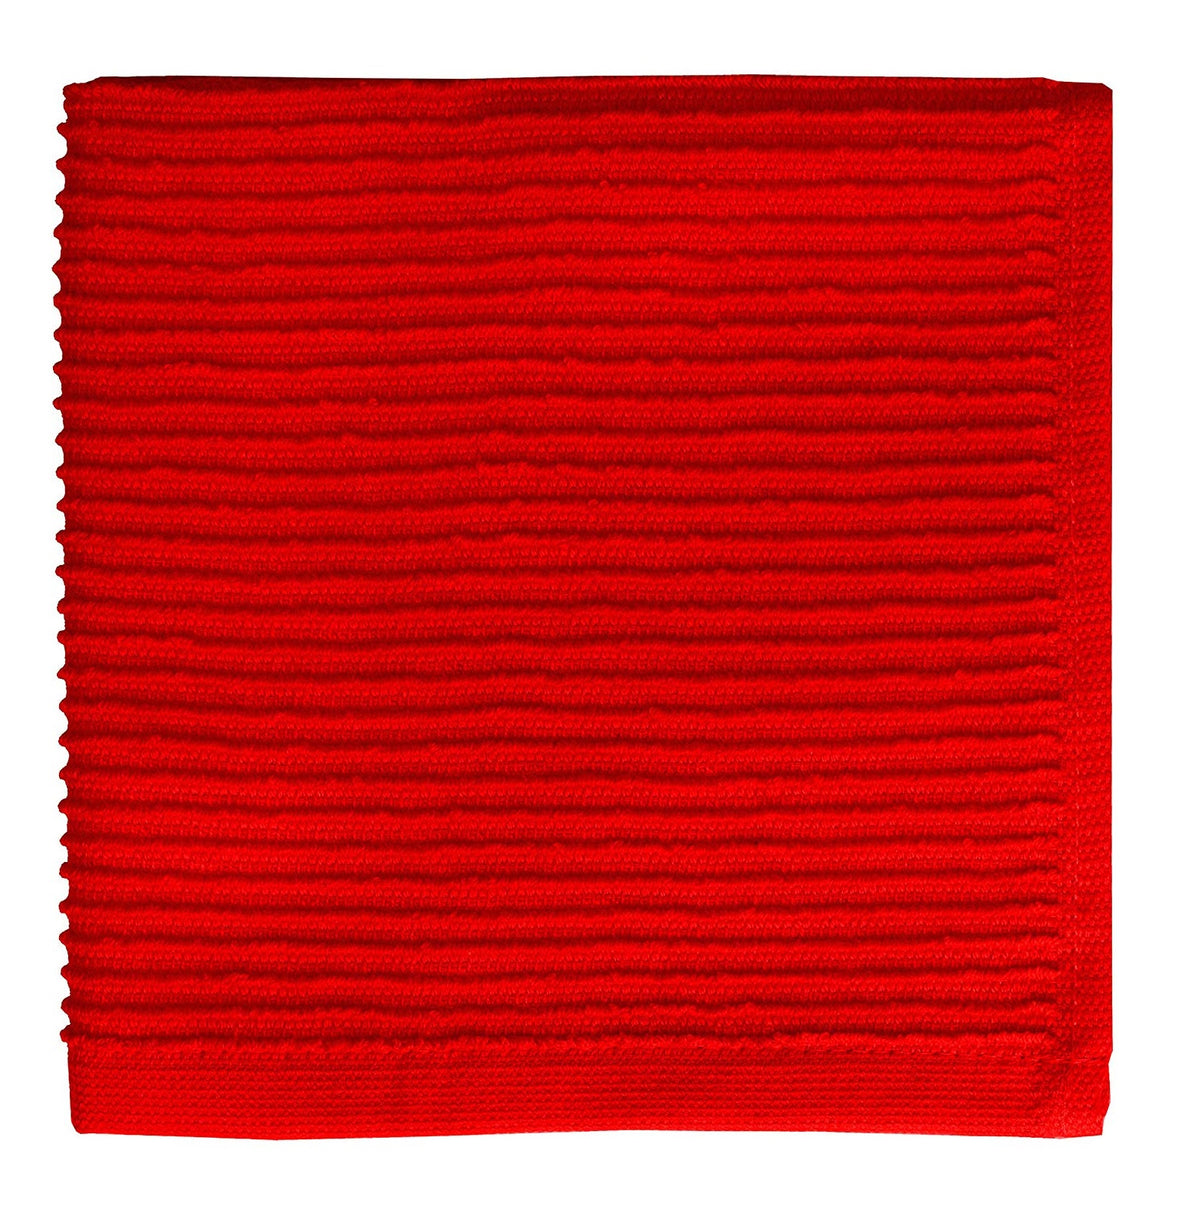 MUkitchen 6614-1526 Ridged Dishcloth, Cotton, Red